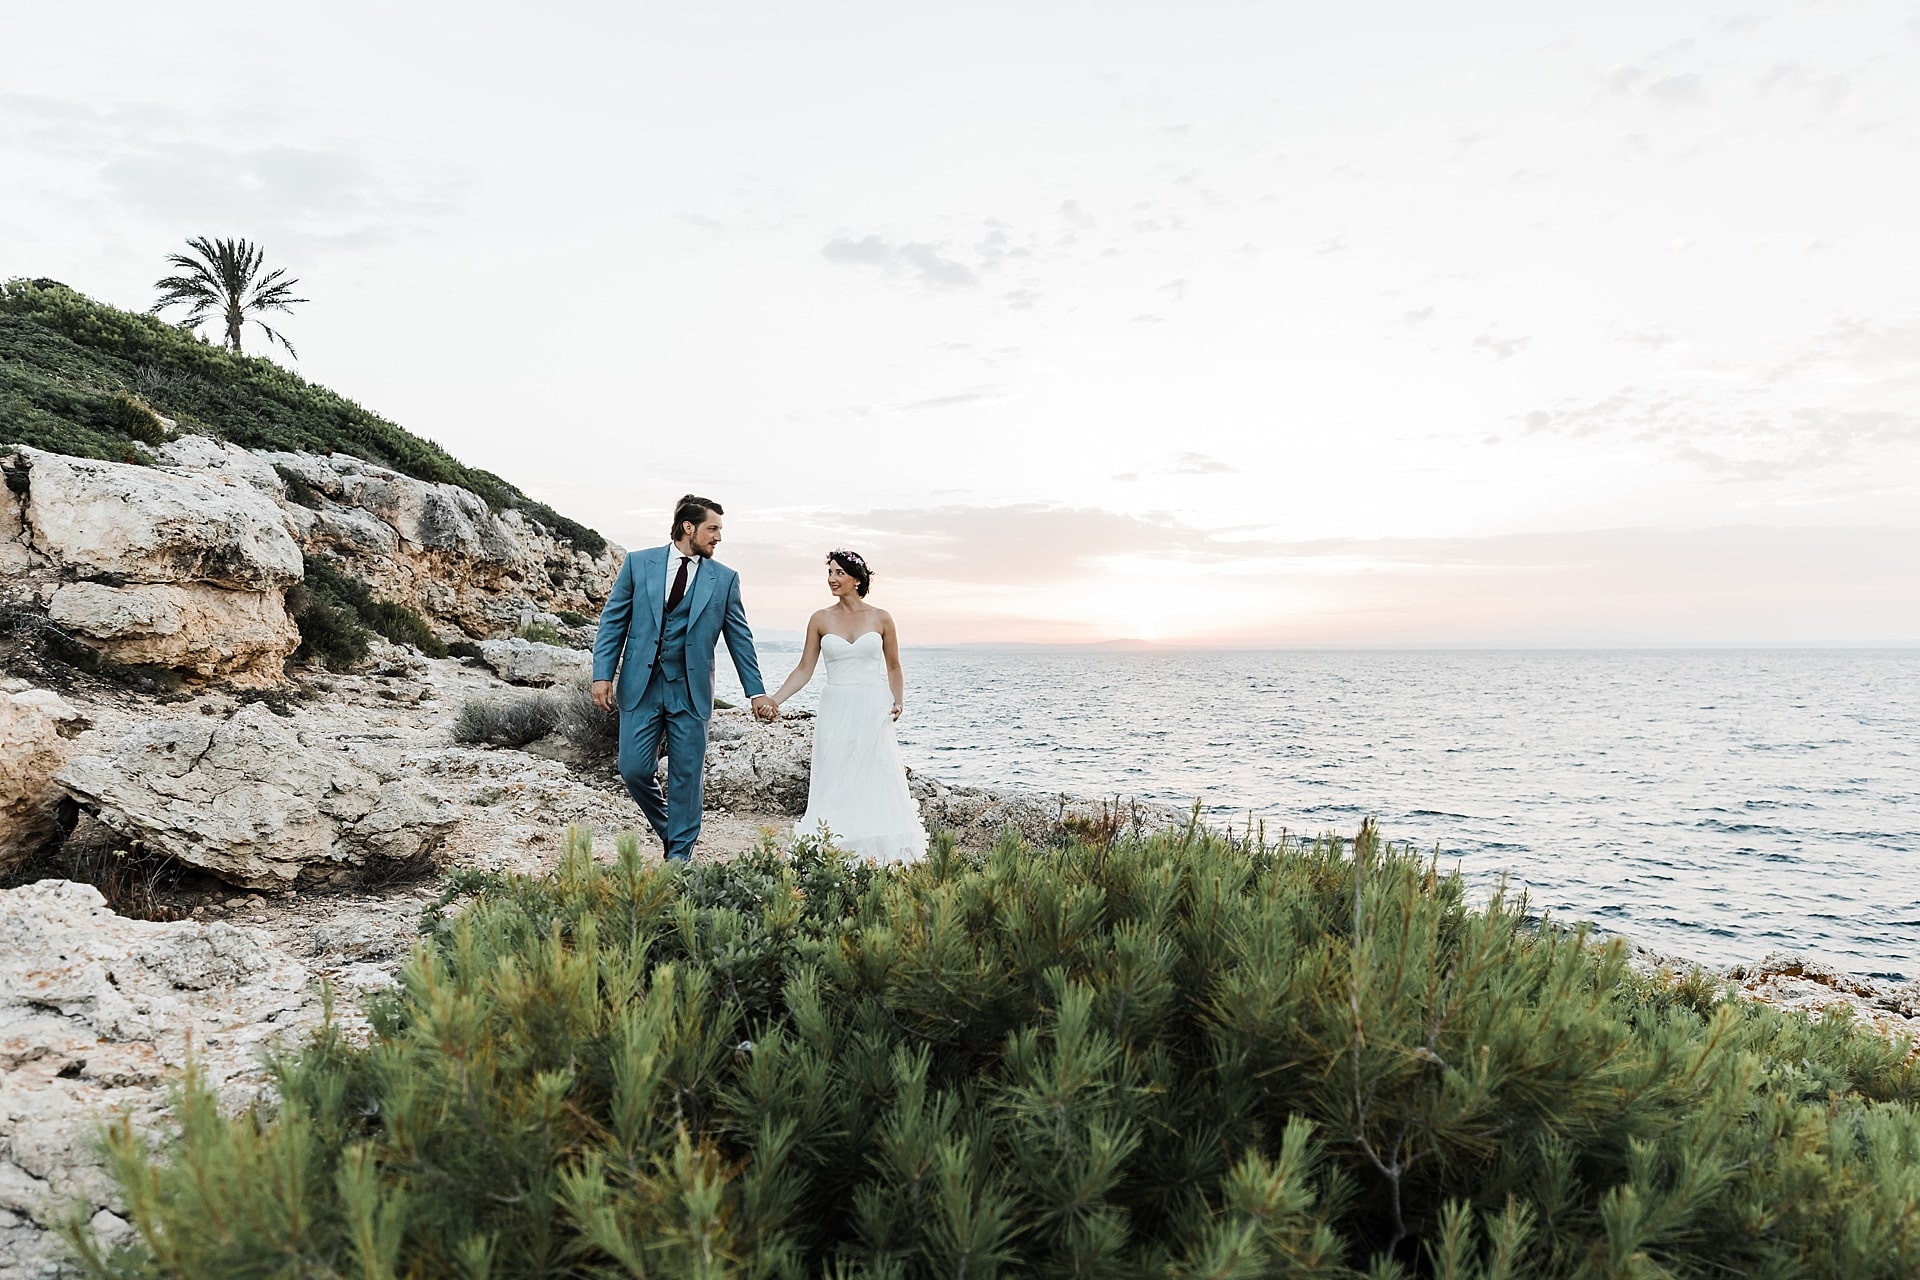 Hochzeit Mallorca Photoshooting Fotoshooting Strand Meer Sonnenuntergang Brautpaar